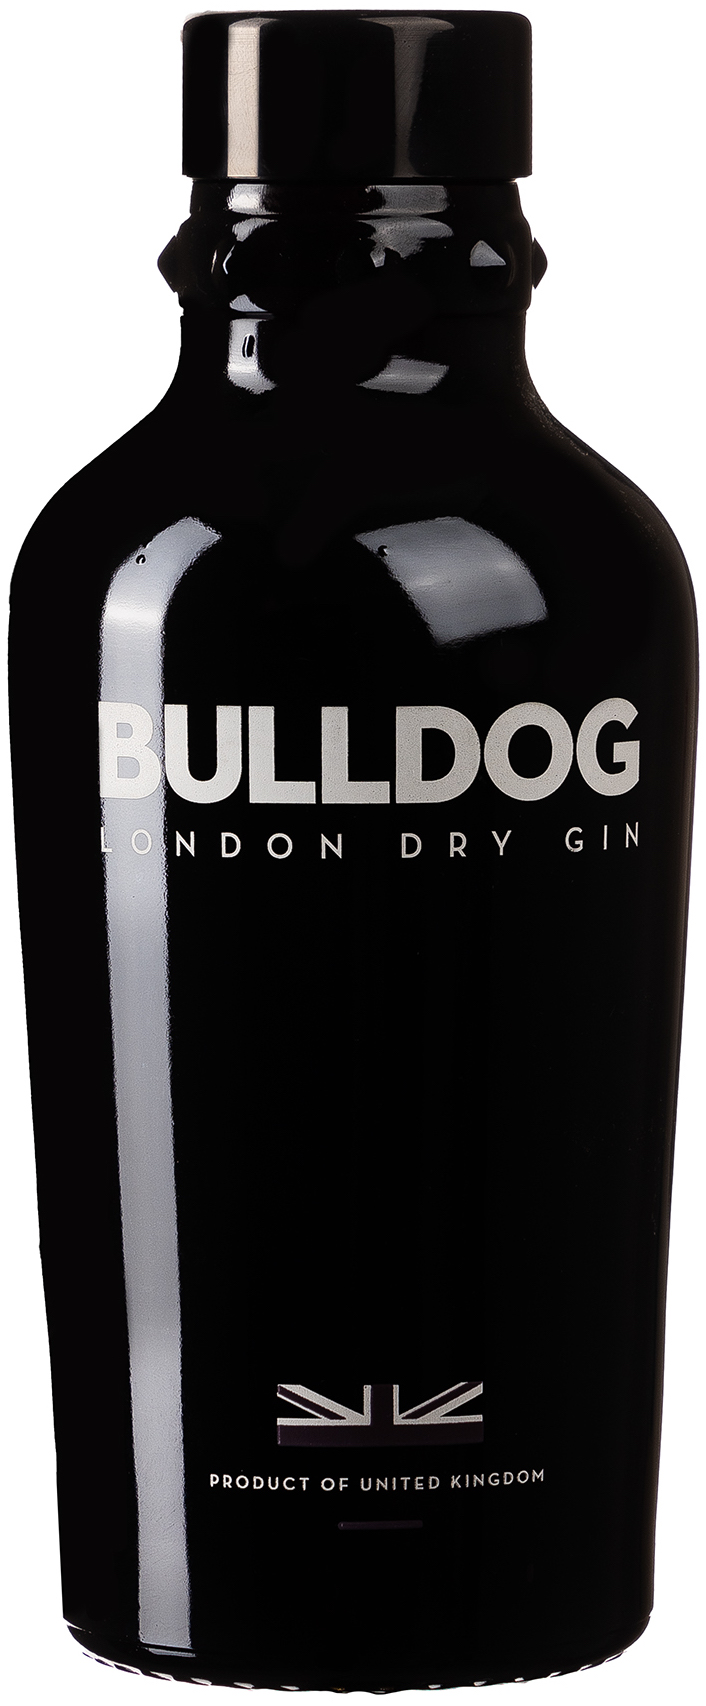 Bulldog London Dry Gin 40% vol. 0,7L